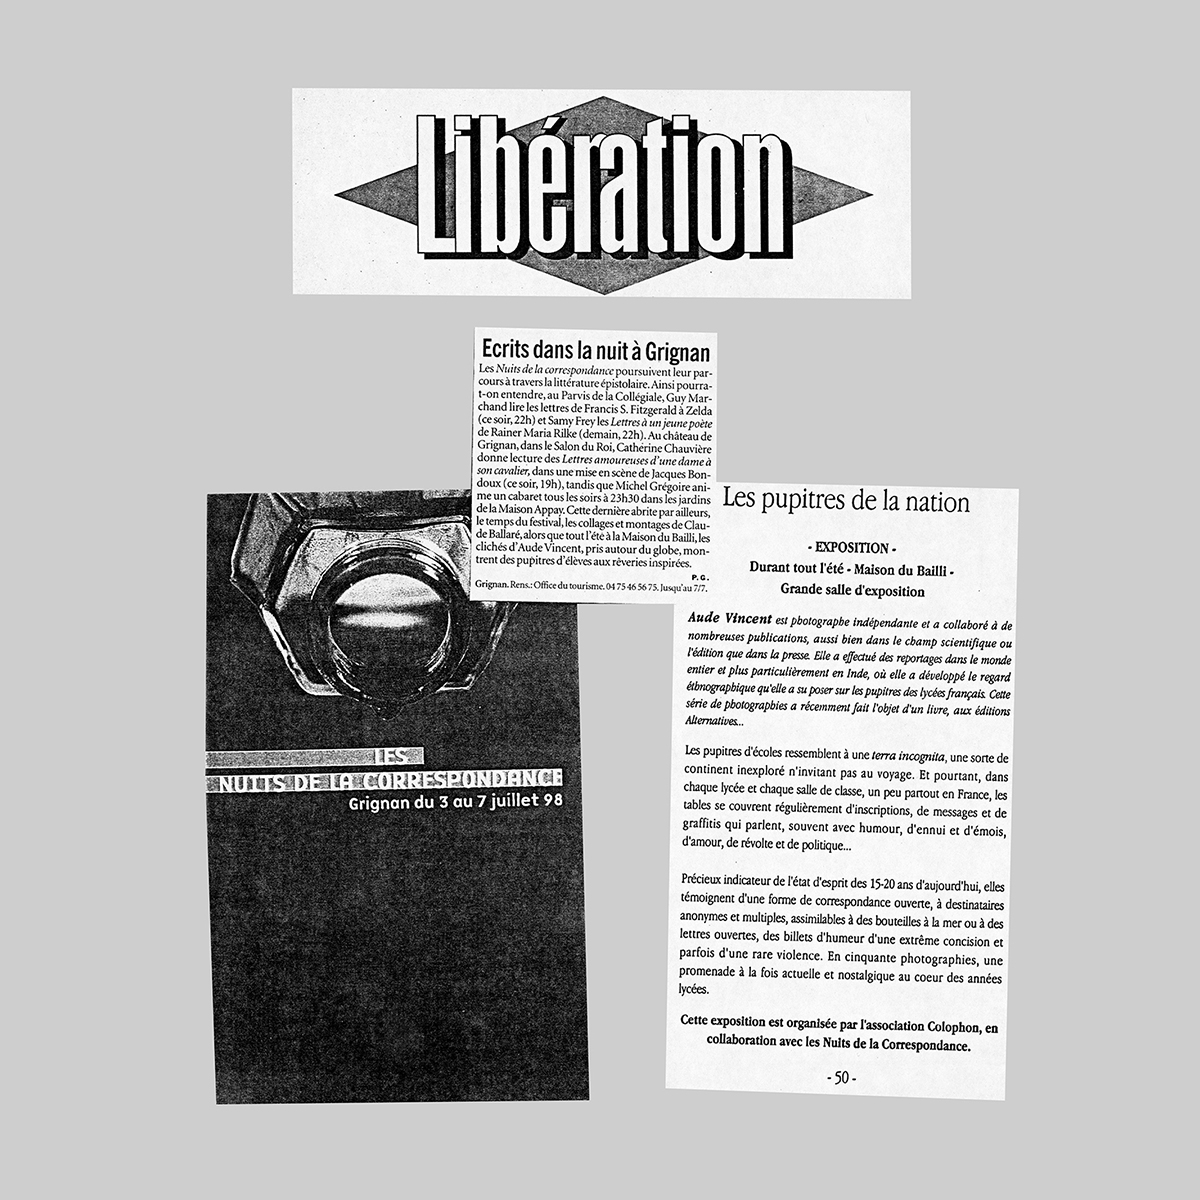 Article-Liberation-DP-Exposition-pupitres-de-la-nation